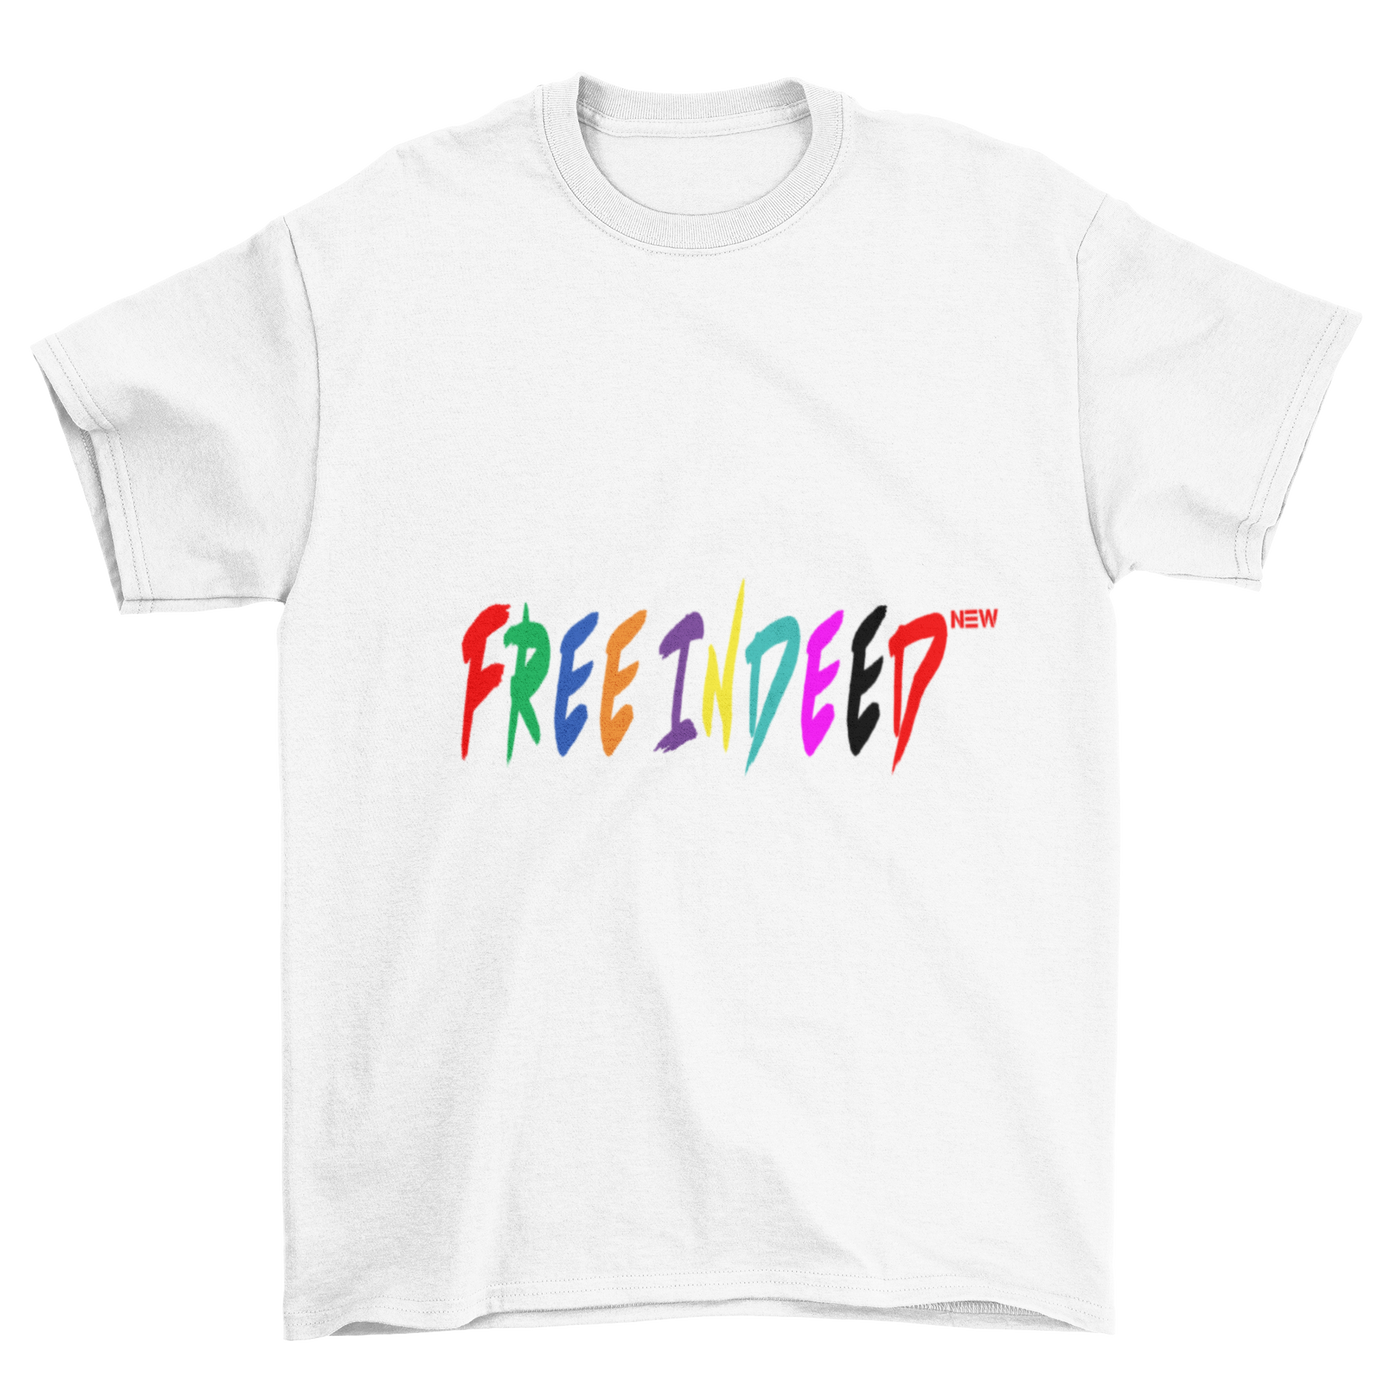 FREE INDEED - T-Shirt